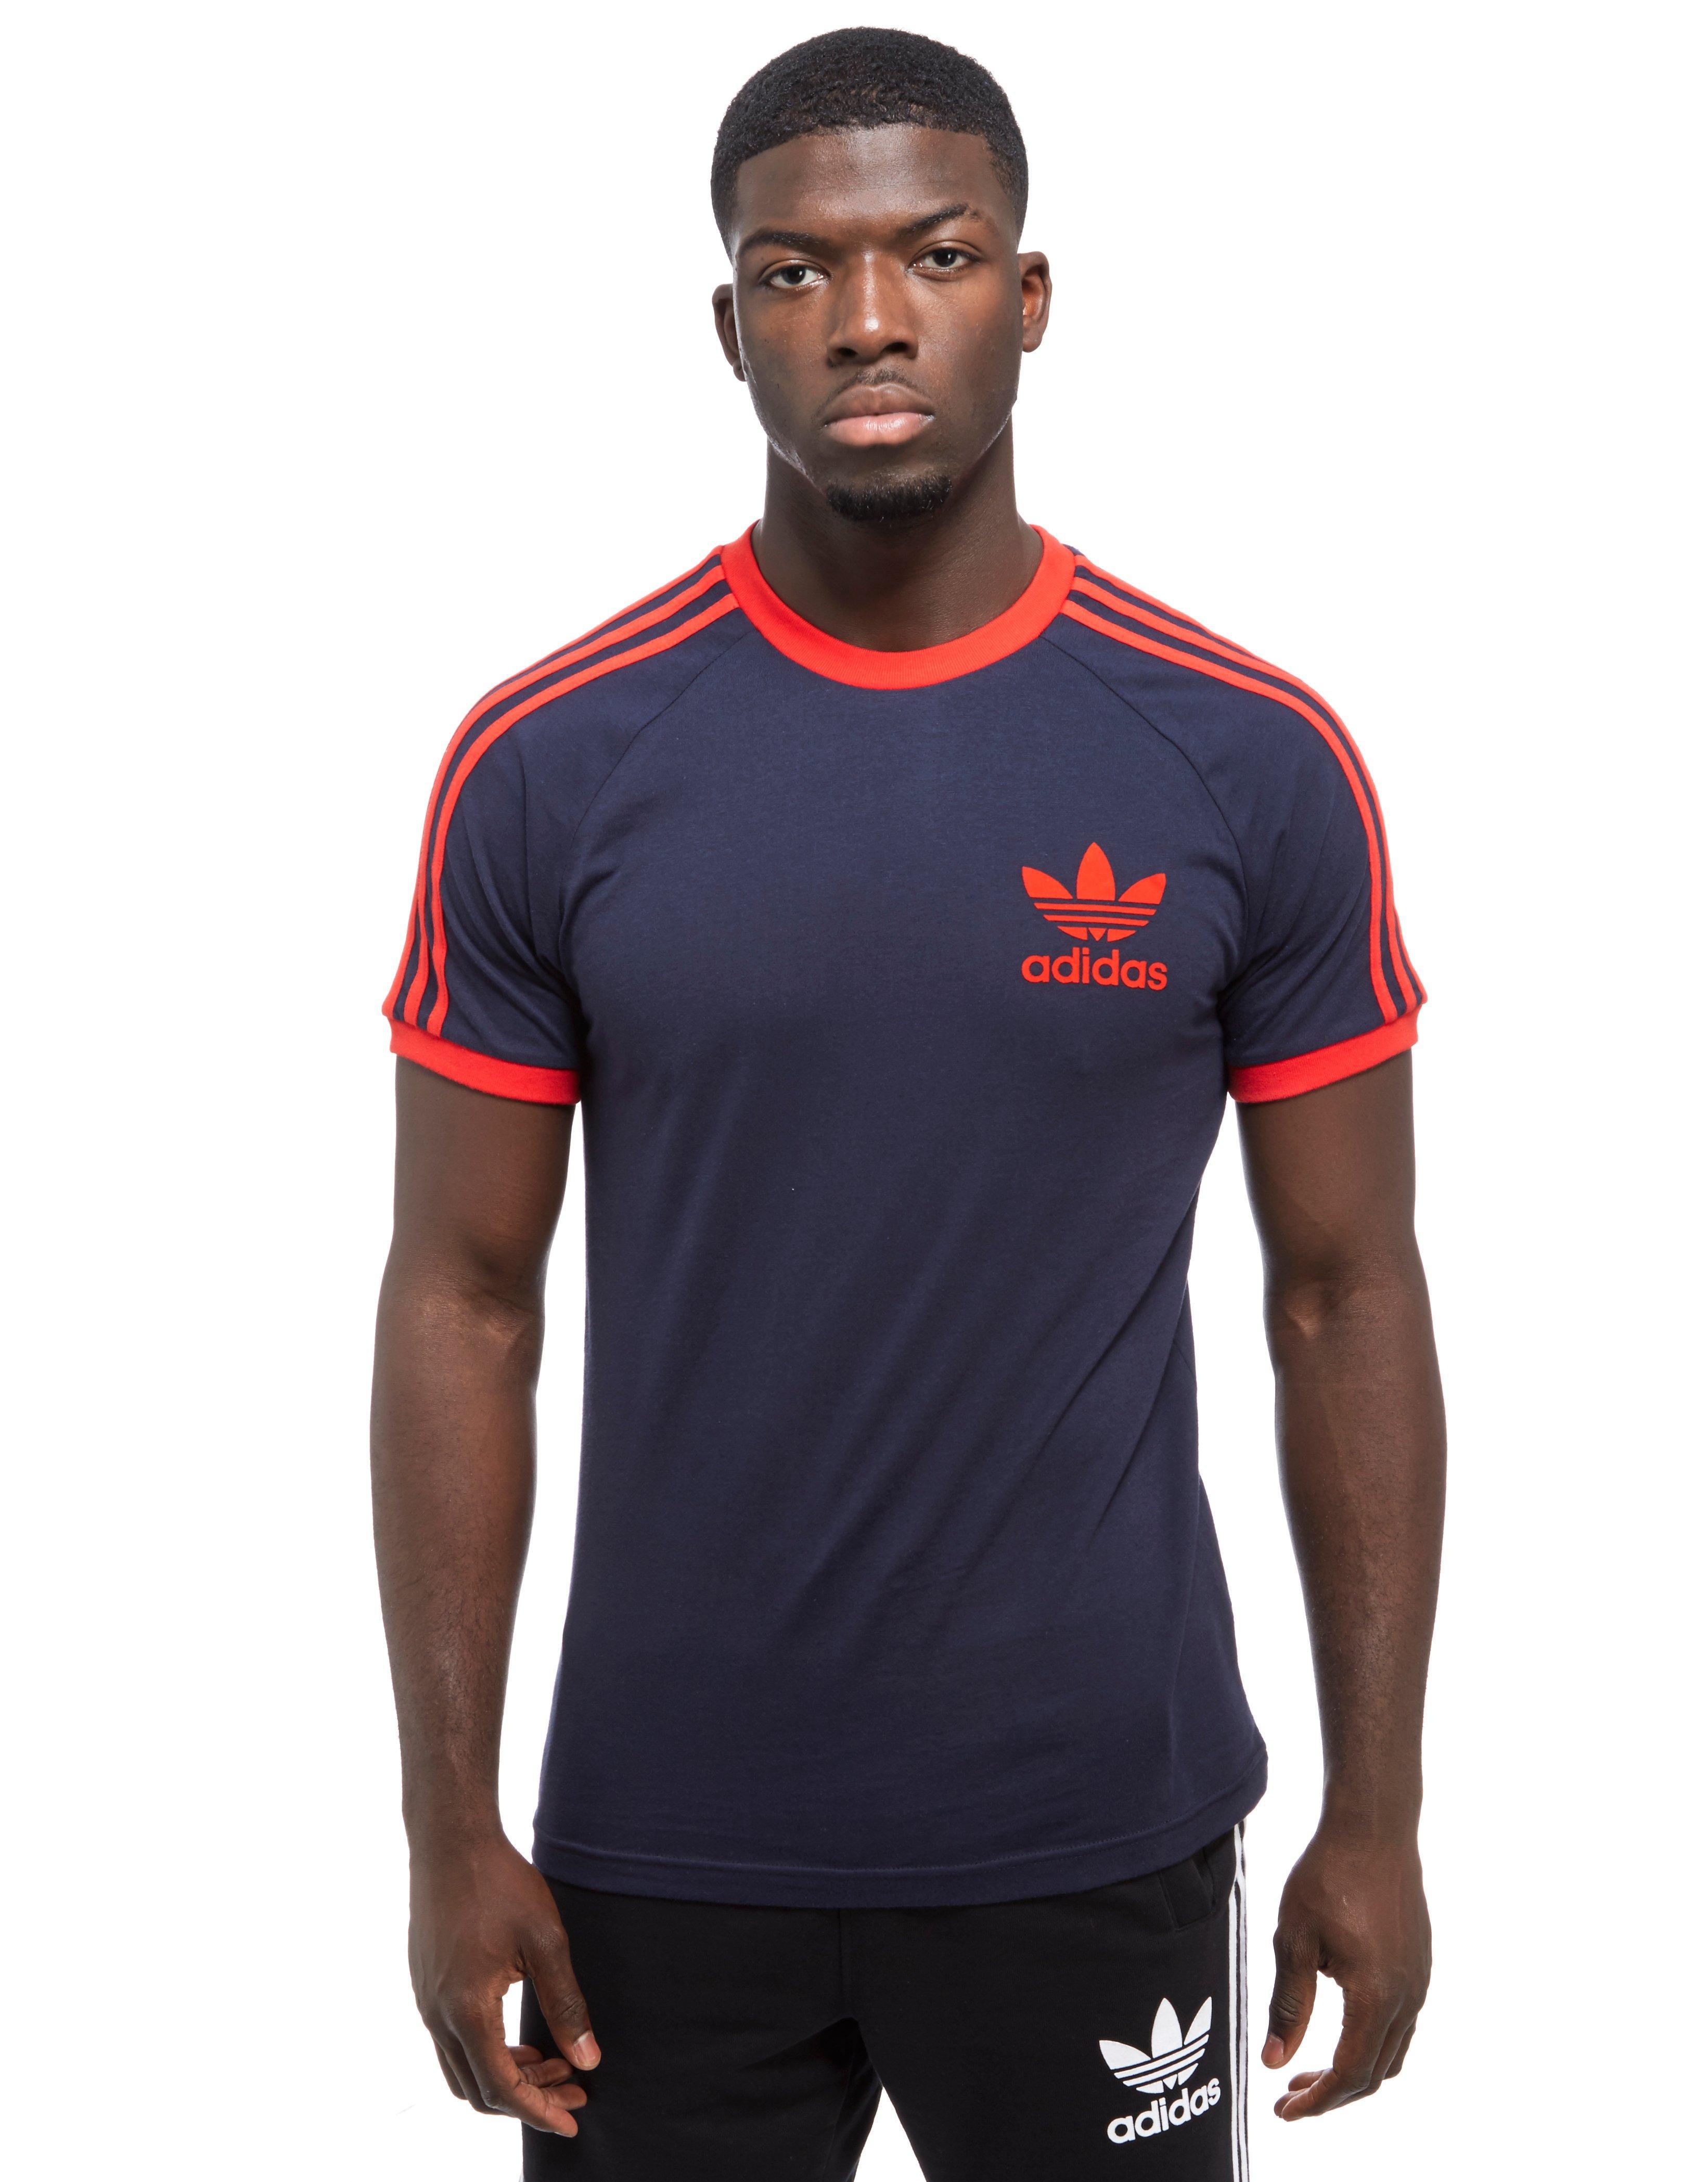 adidas Originals Cotton California Short Sleeve T-shirt in Navy/Red (Blue)  for Men - Lyst